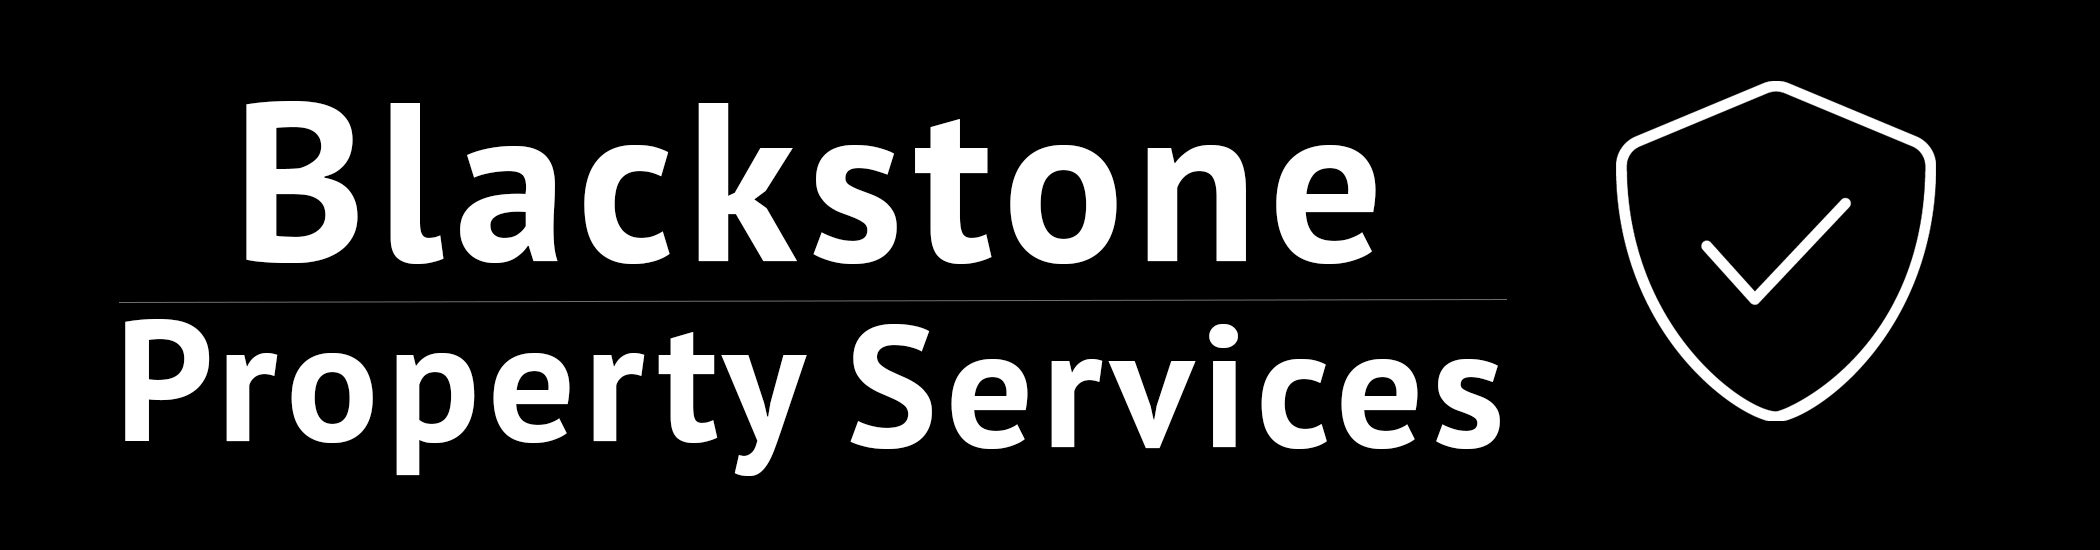 Blackstone Property Services